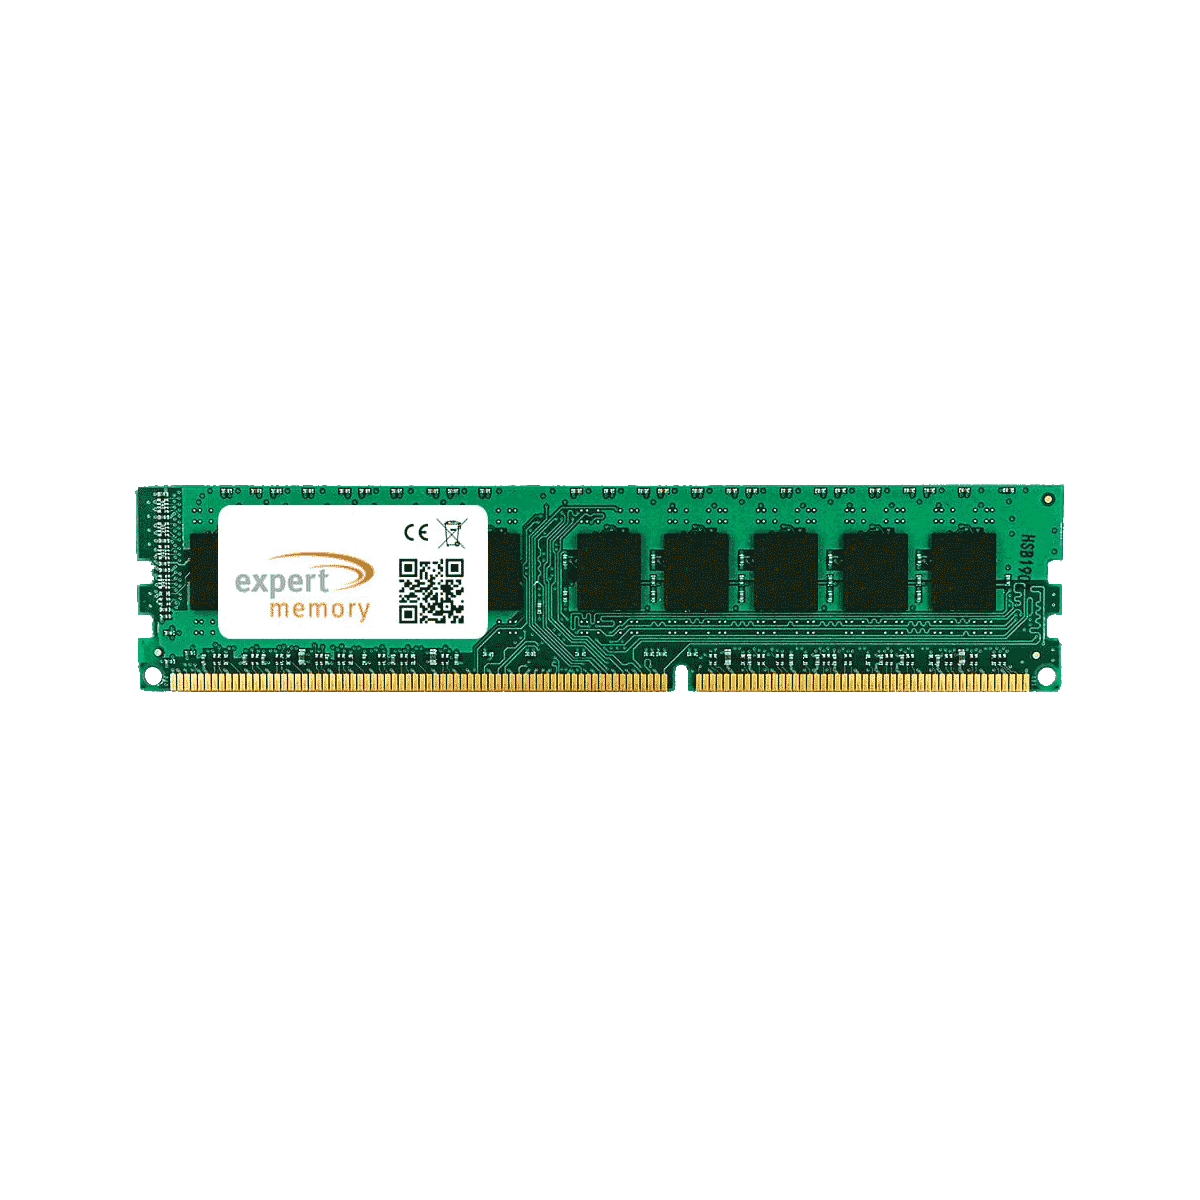 RAM 2Rx8 DDR3 UDIMM PC MT PC MEMORY GB 8GB 8 Medion Memory MT8000 EXPERT Upgrade 1333 MED